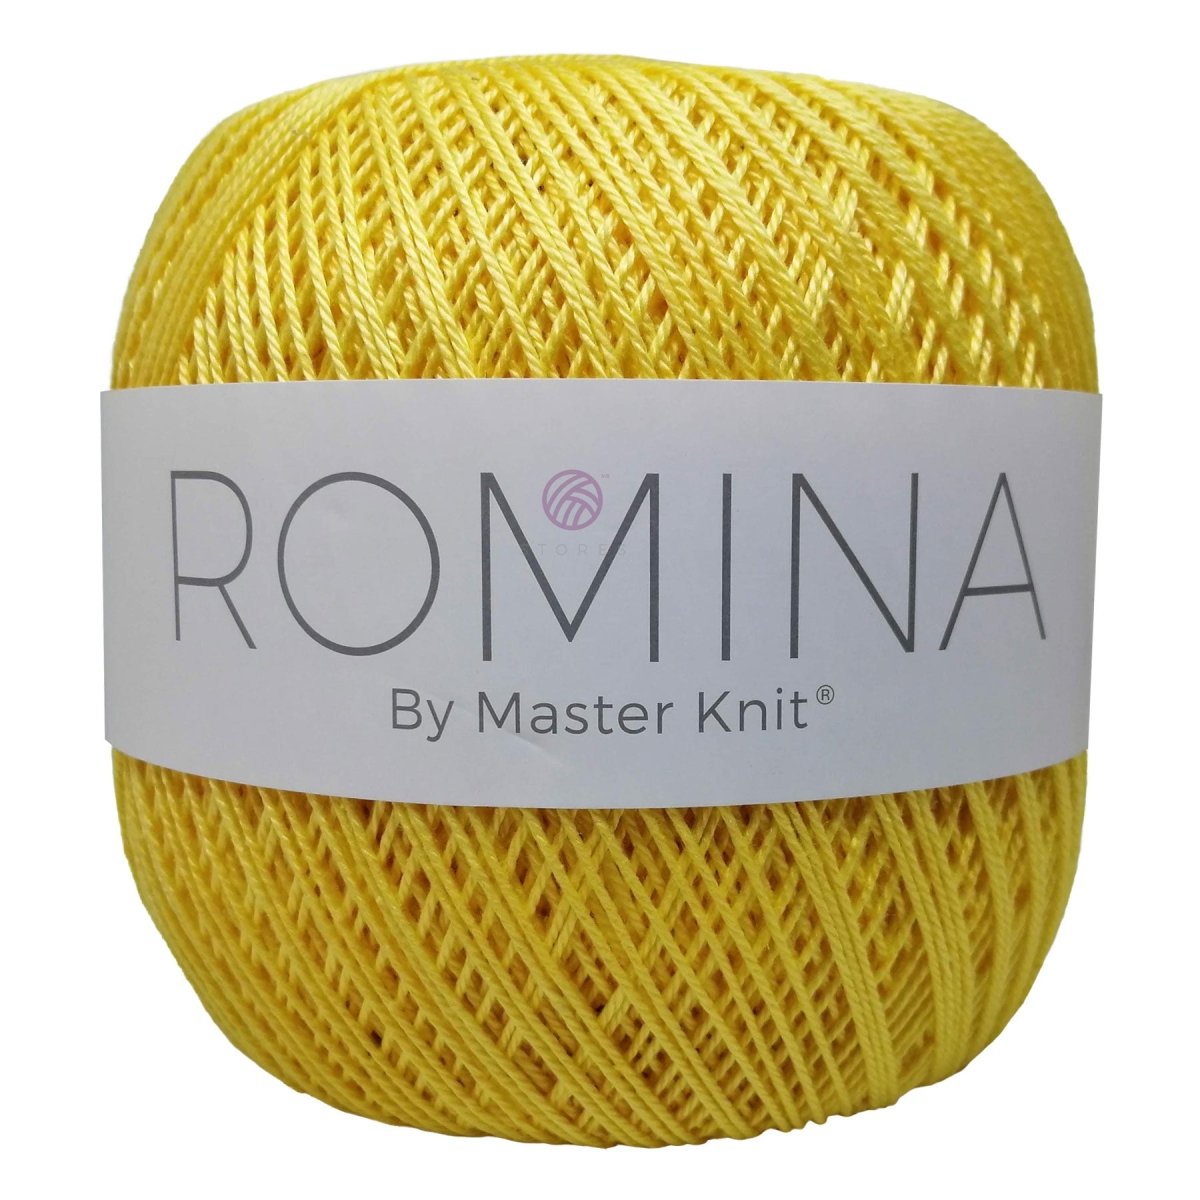 ROMINA - Crochetstores9335-178745051438500